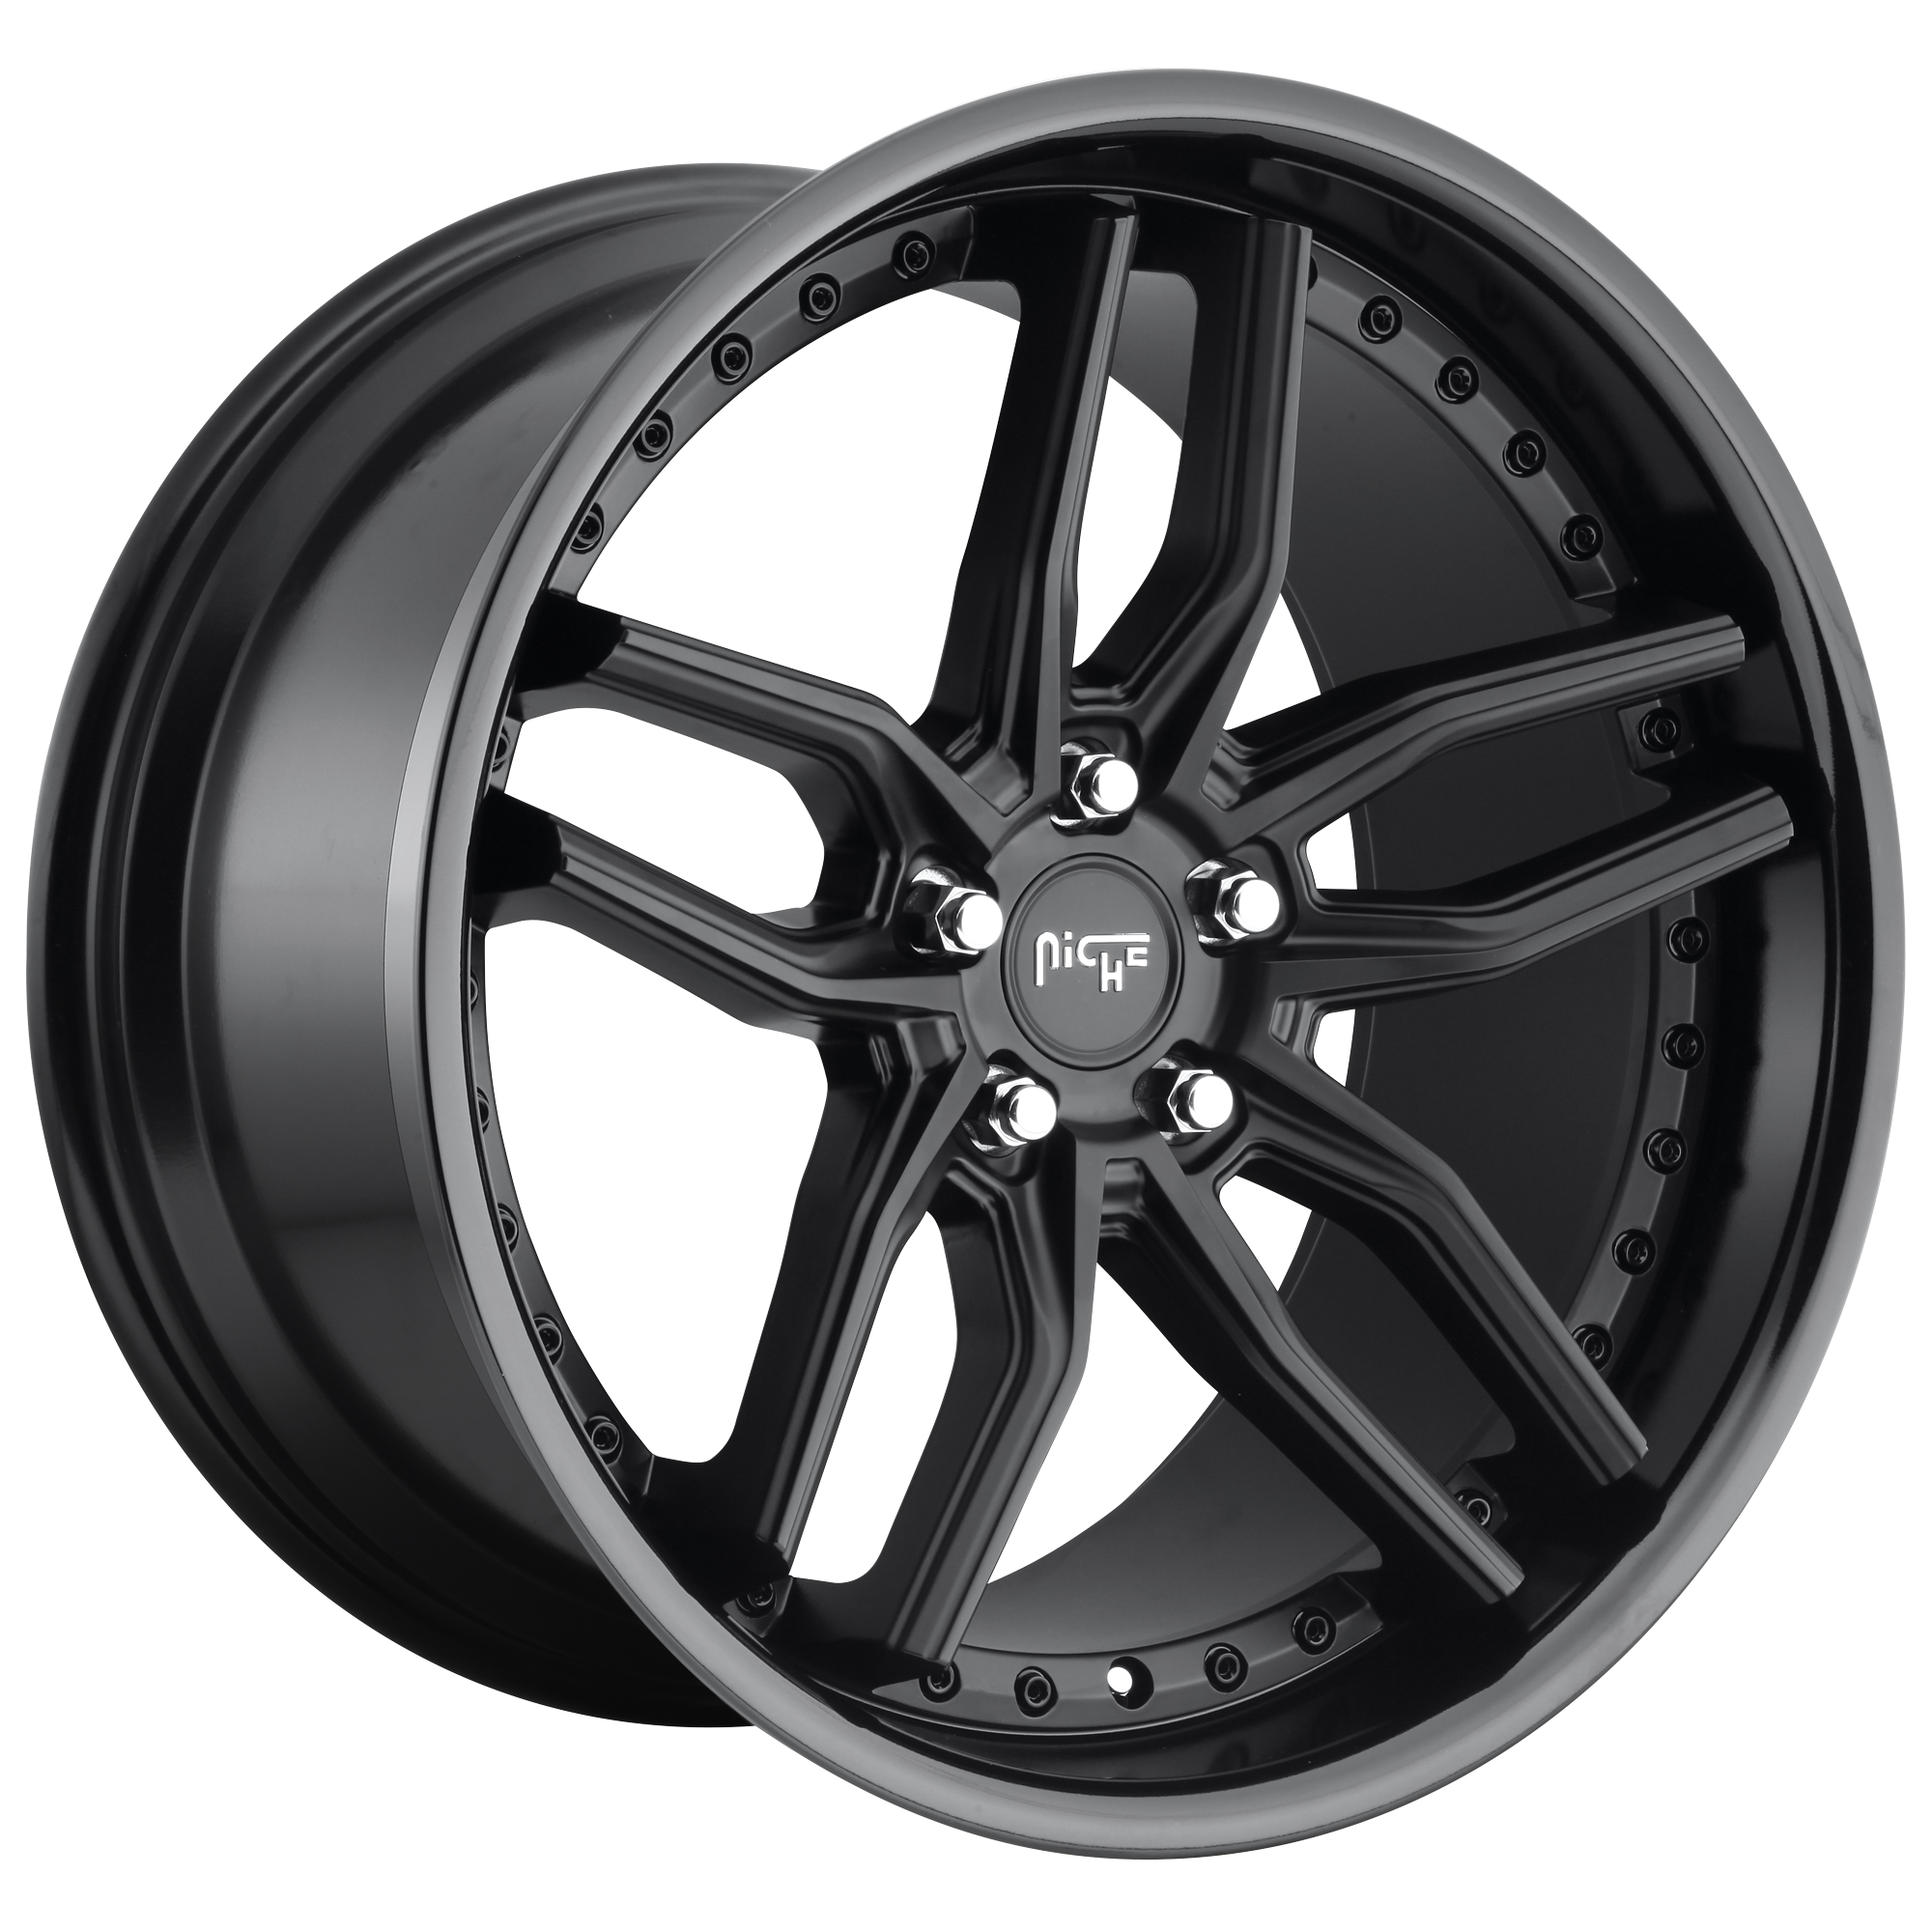 METHOS 19x8.5 5x114.30 GLOSS BLACK MATTE BLACK (35 mm) - Tires and Engine Performance